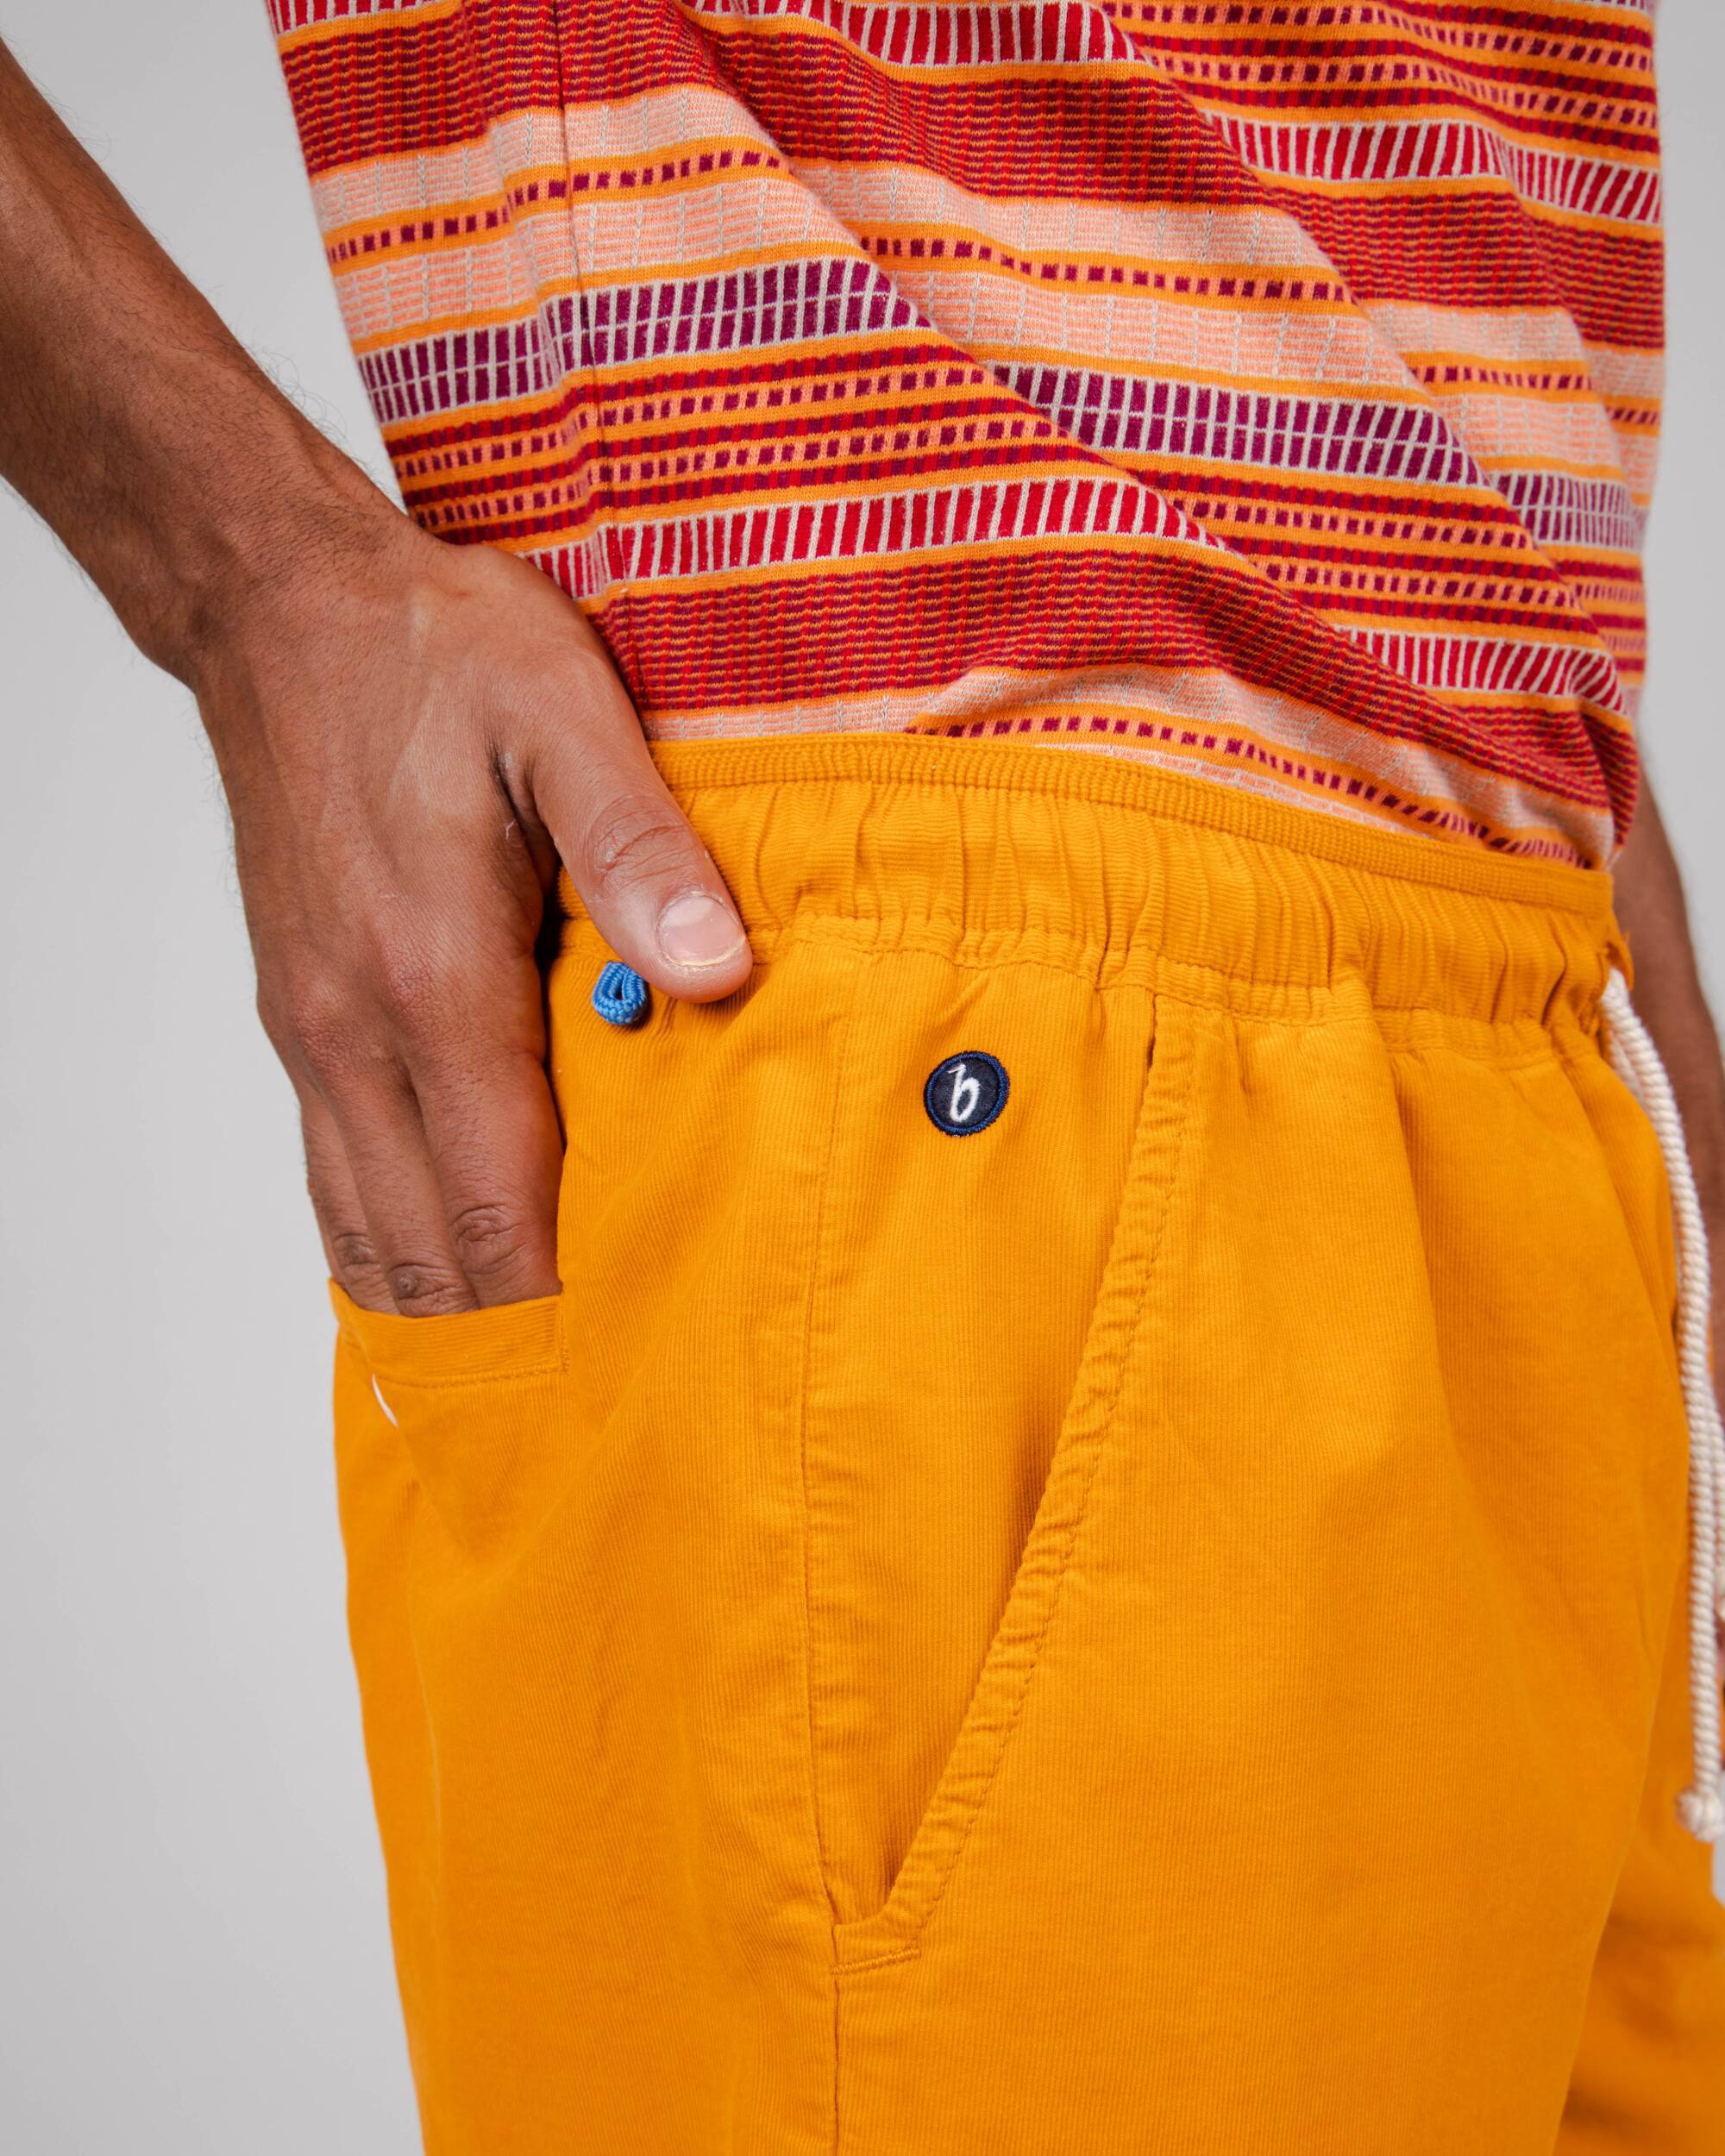 Orange baby corduroy shorts made from 100% organic cotton from Brava Fabrics